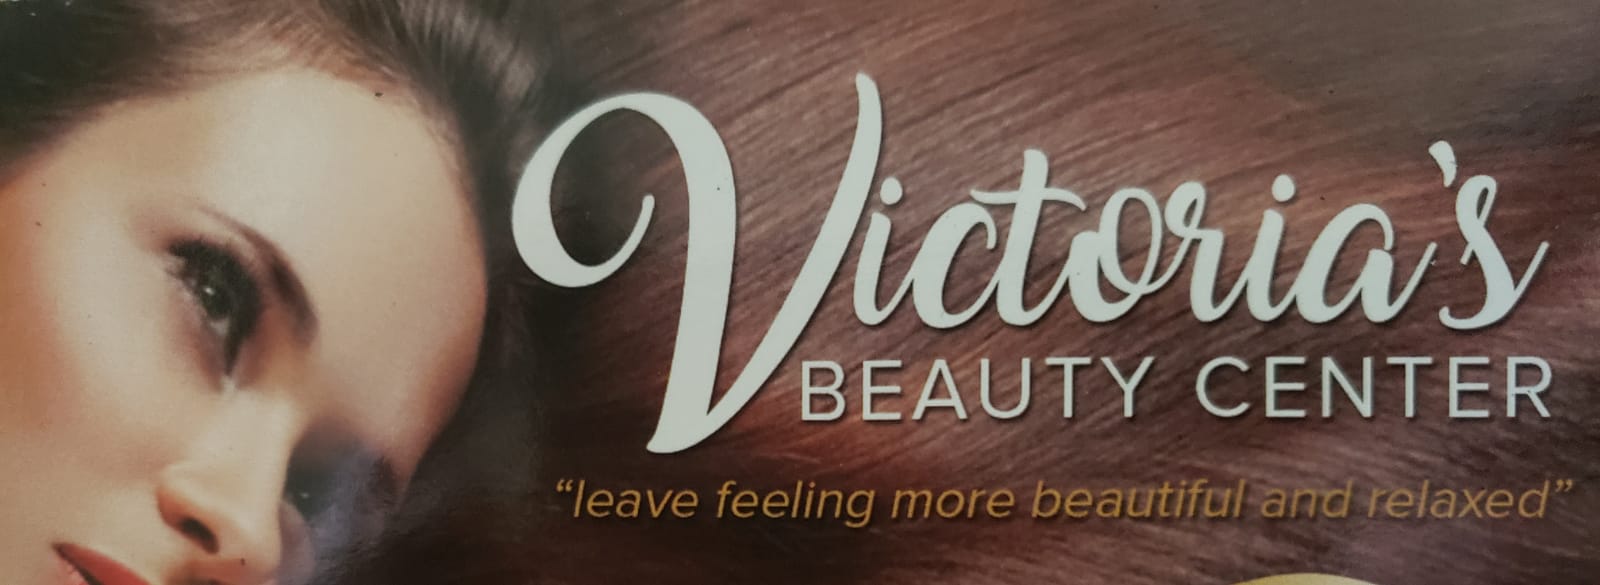 Victoria's Beauty Center - Beauty Salons